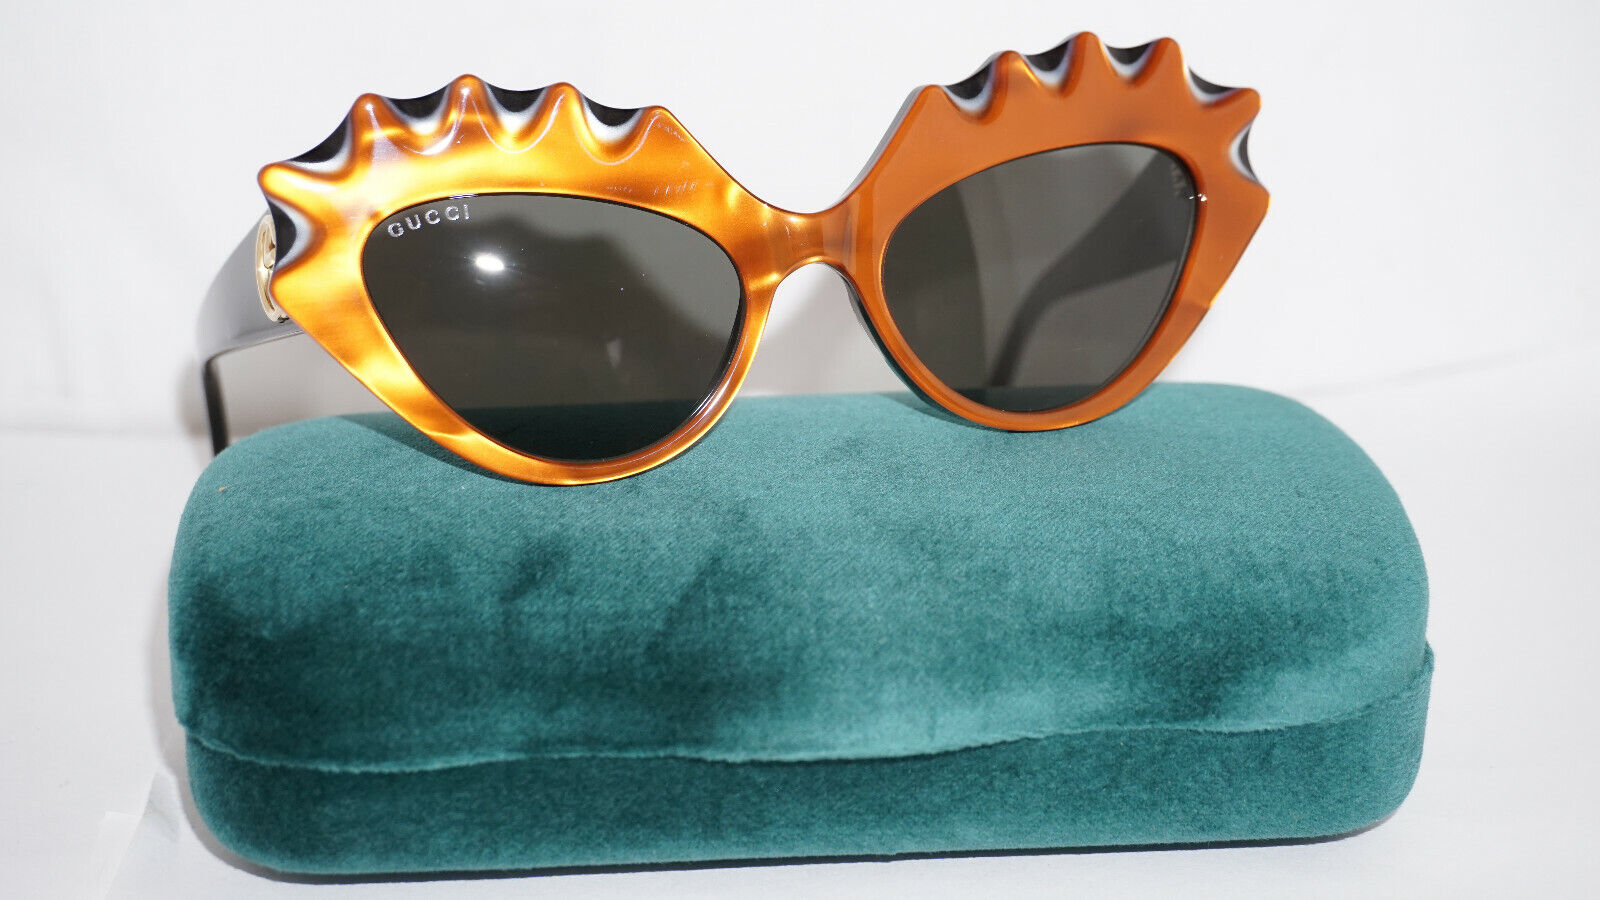 nek Einde Zielig GUCCI New Sunglasses Cateye Orange Black Grey GG0781S 001 52 18 145  889652303710 | eBay